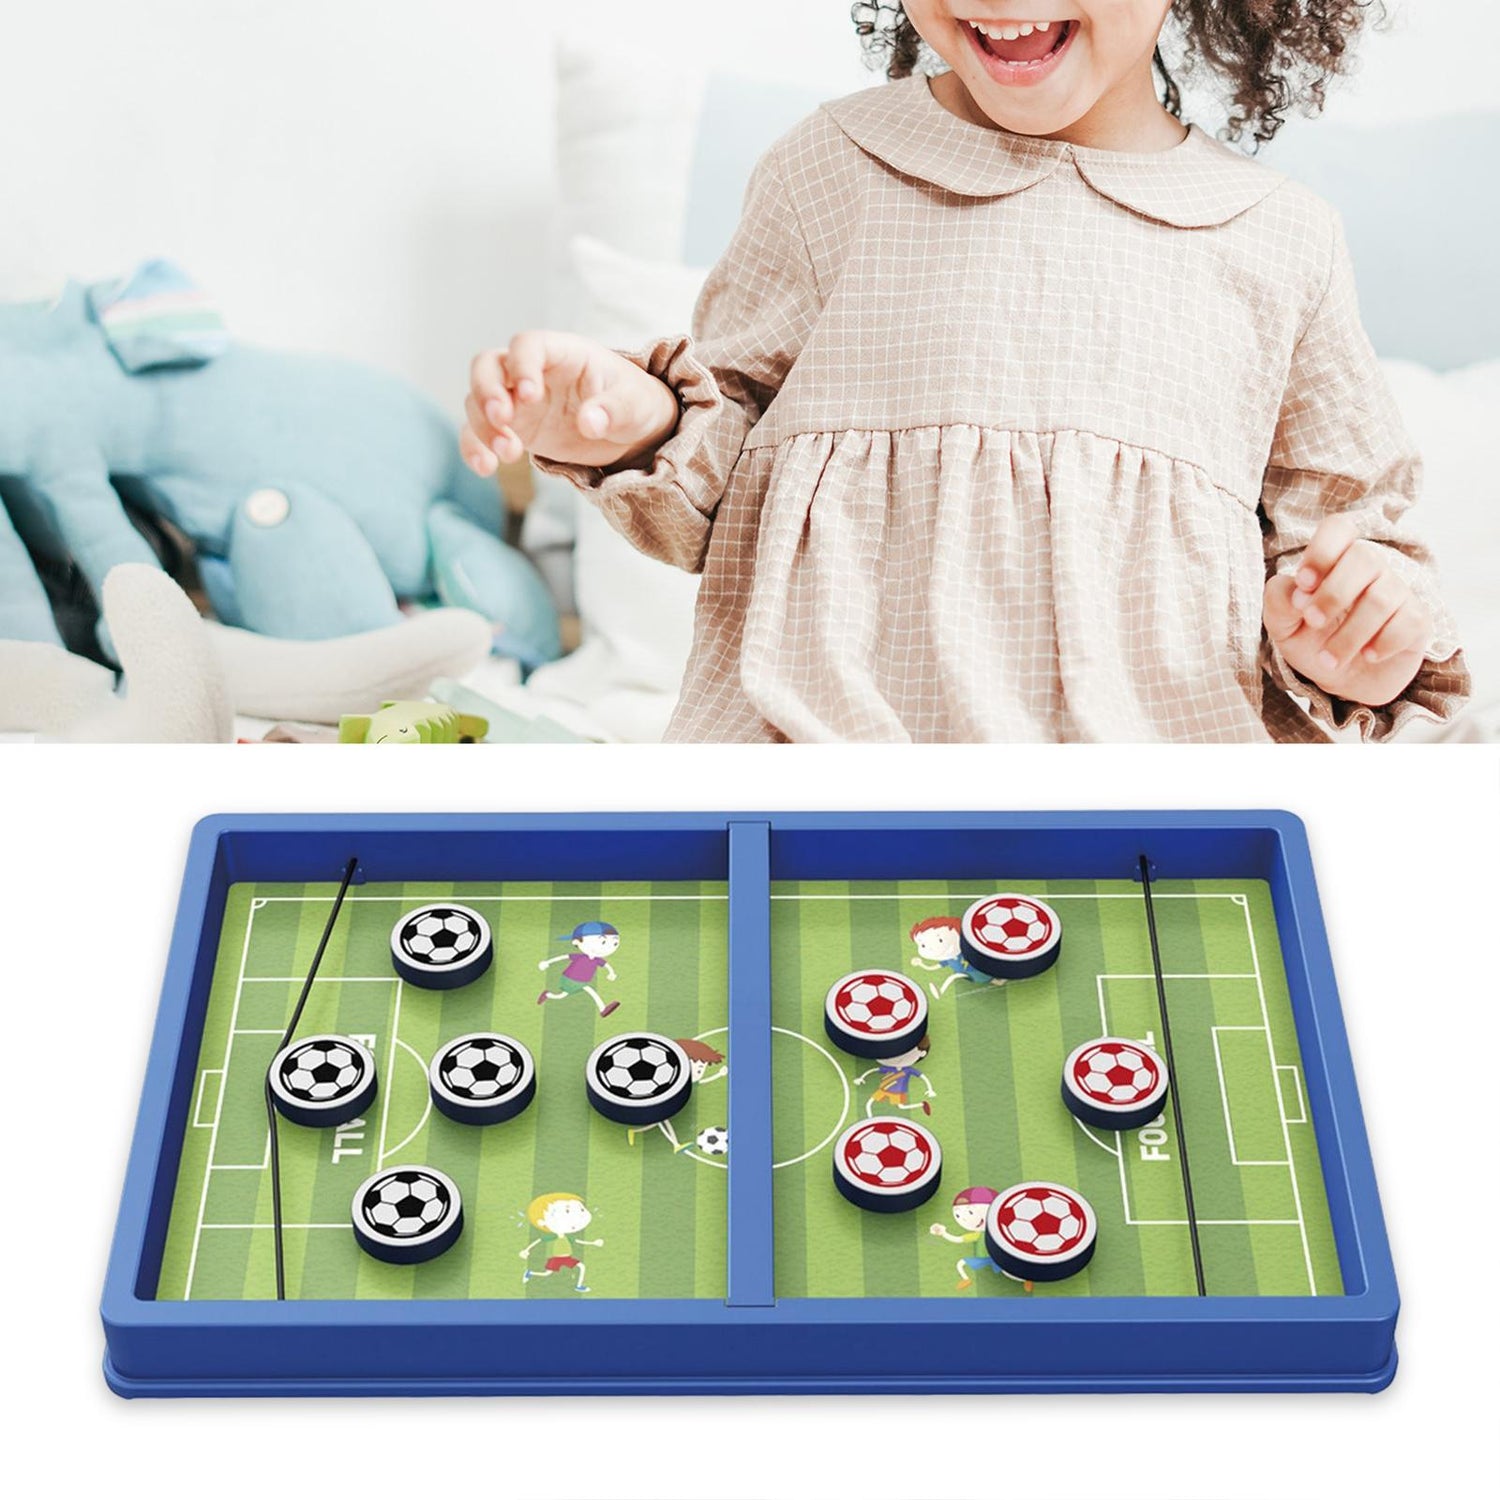 Fast Puck Game Table Game for Party Parent Child Interactive - X10 Maroc - Livraison gratuite -